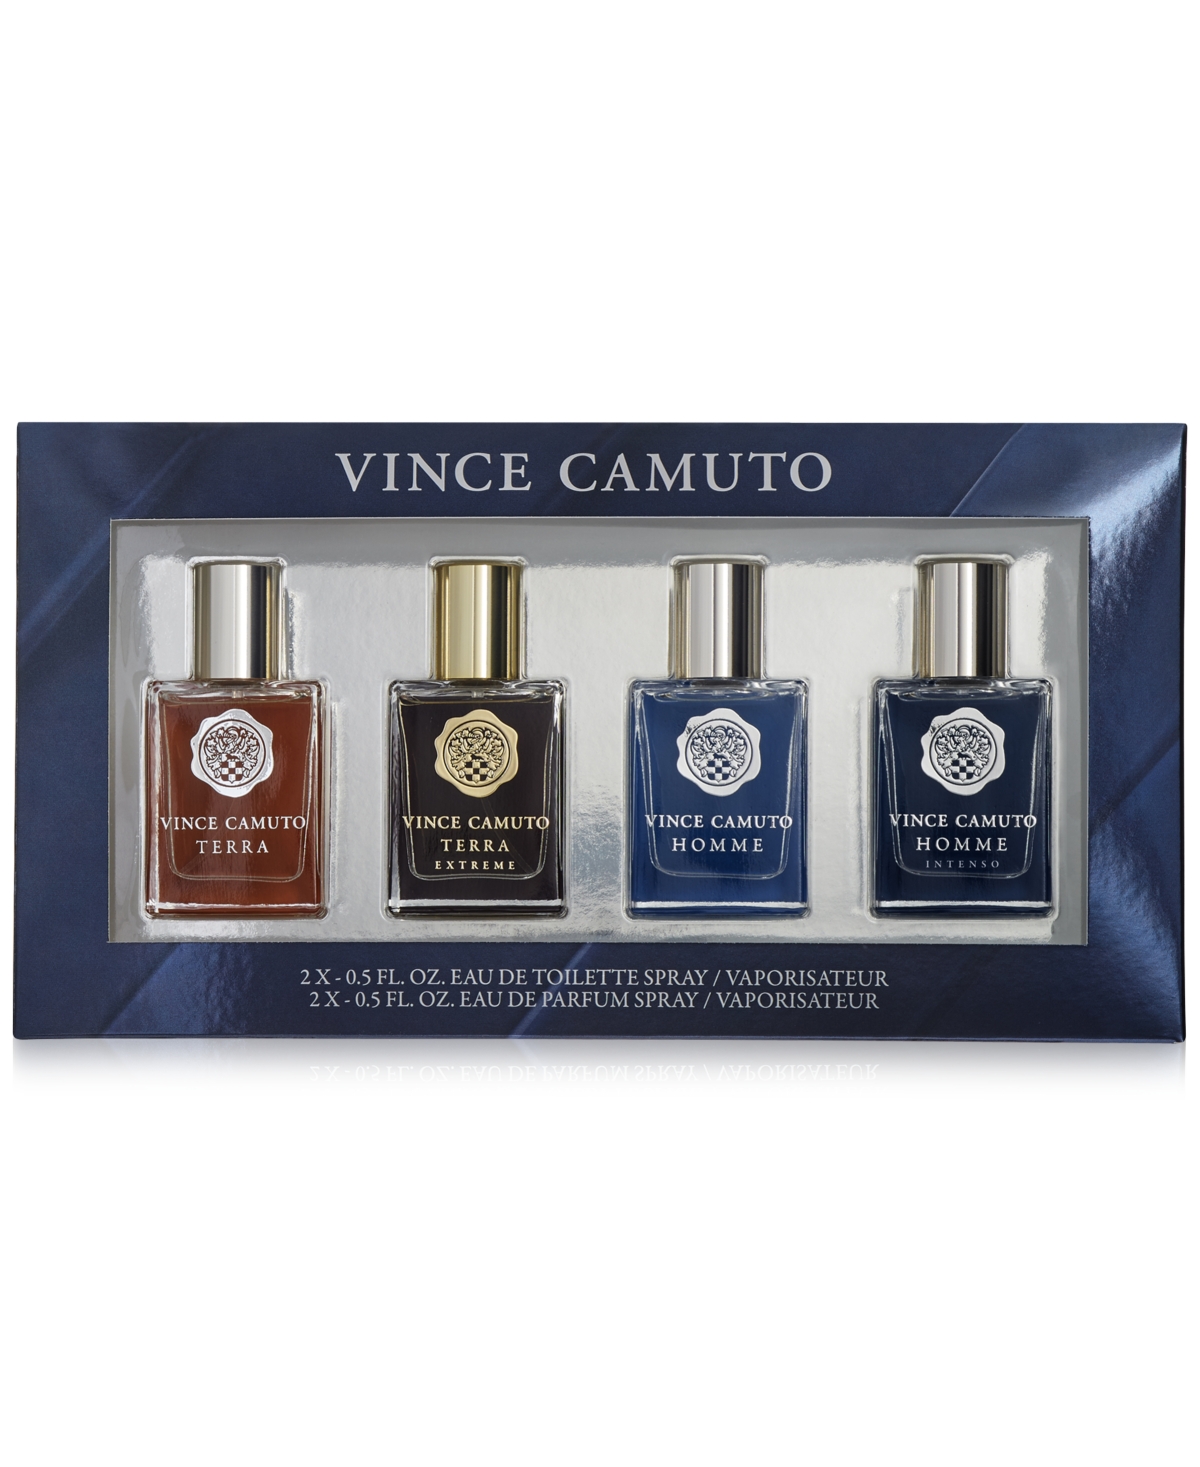 VINCE CAMUTO Fragrance Sale